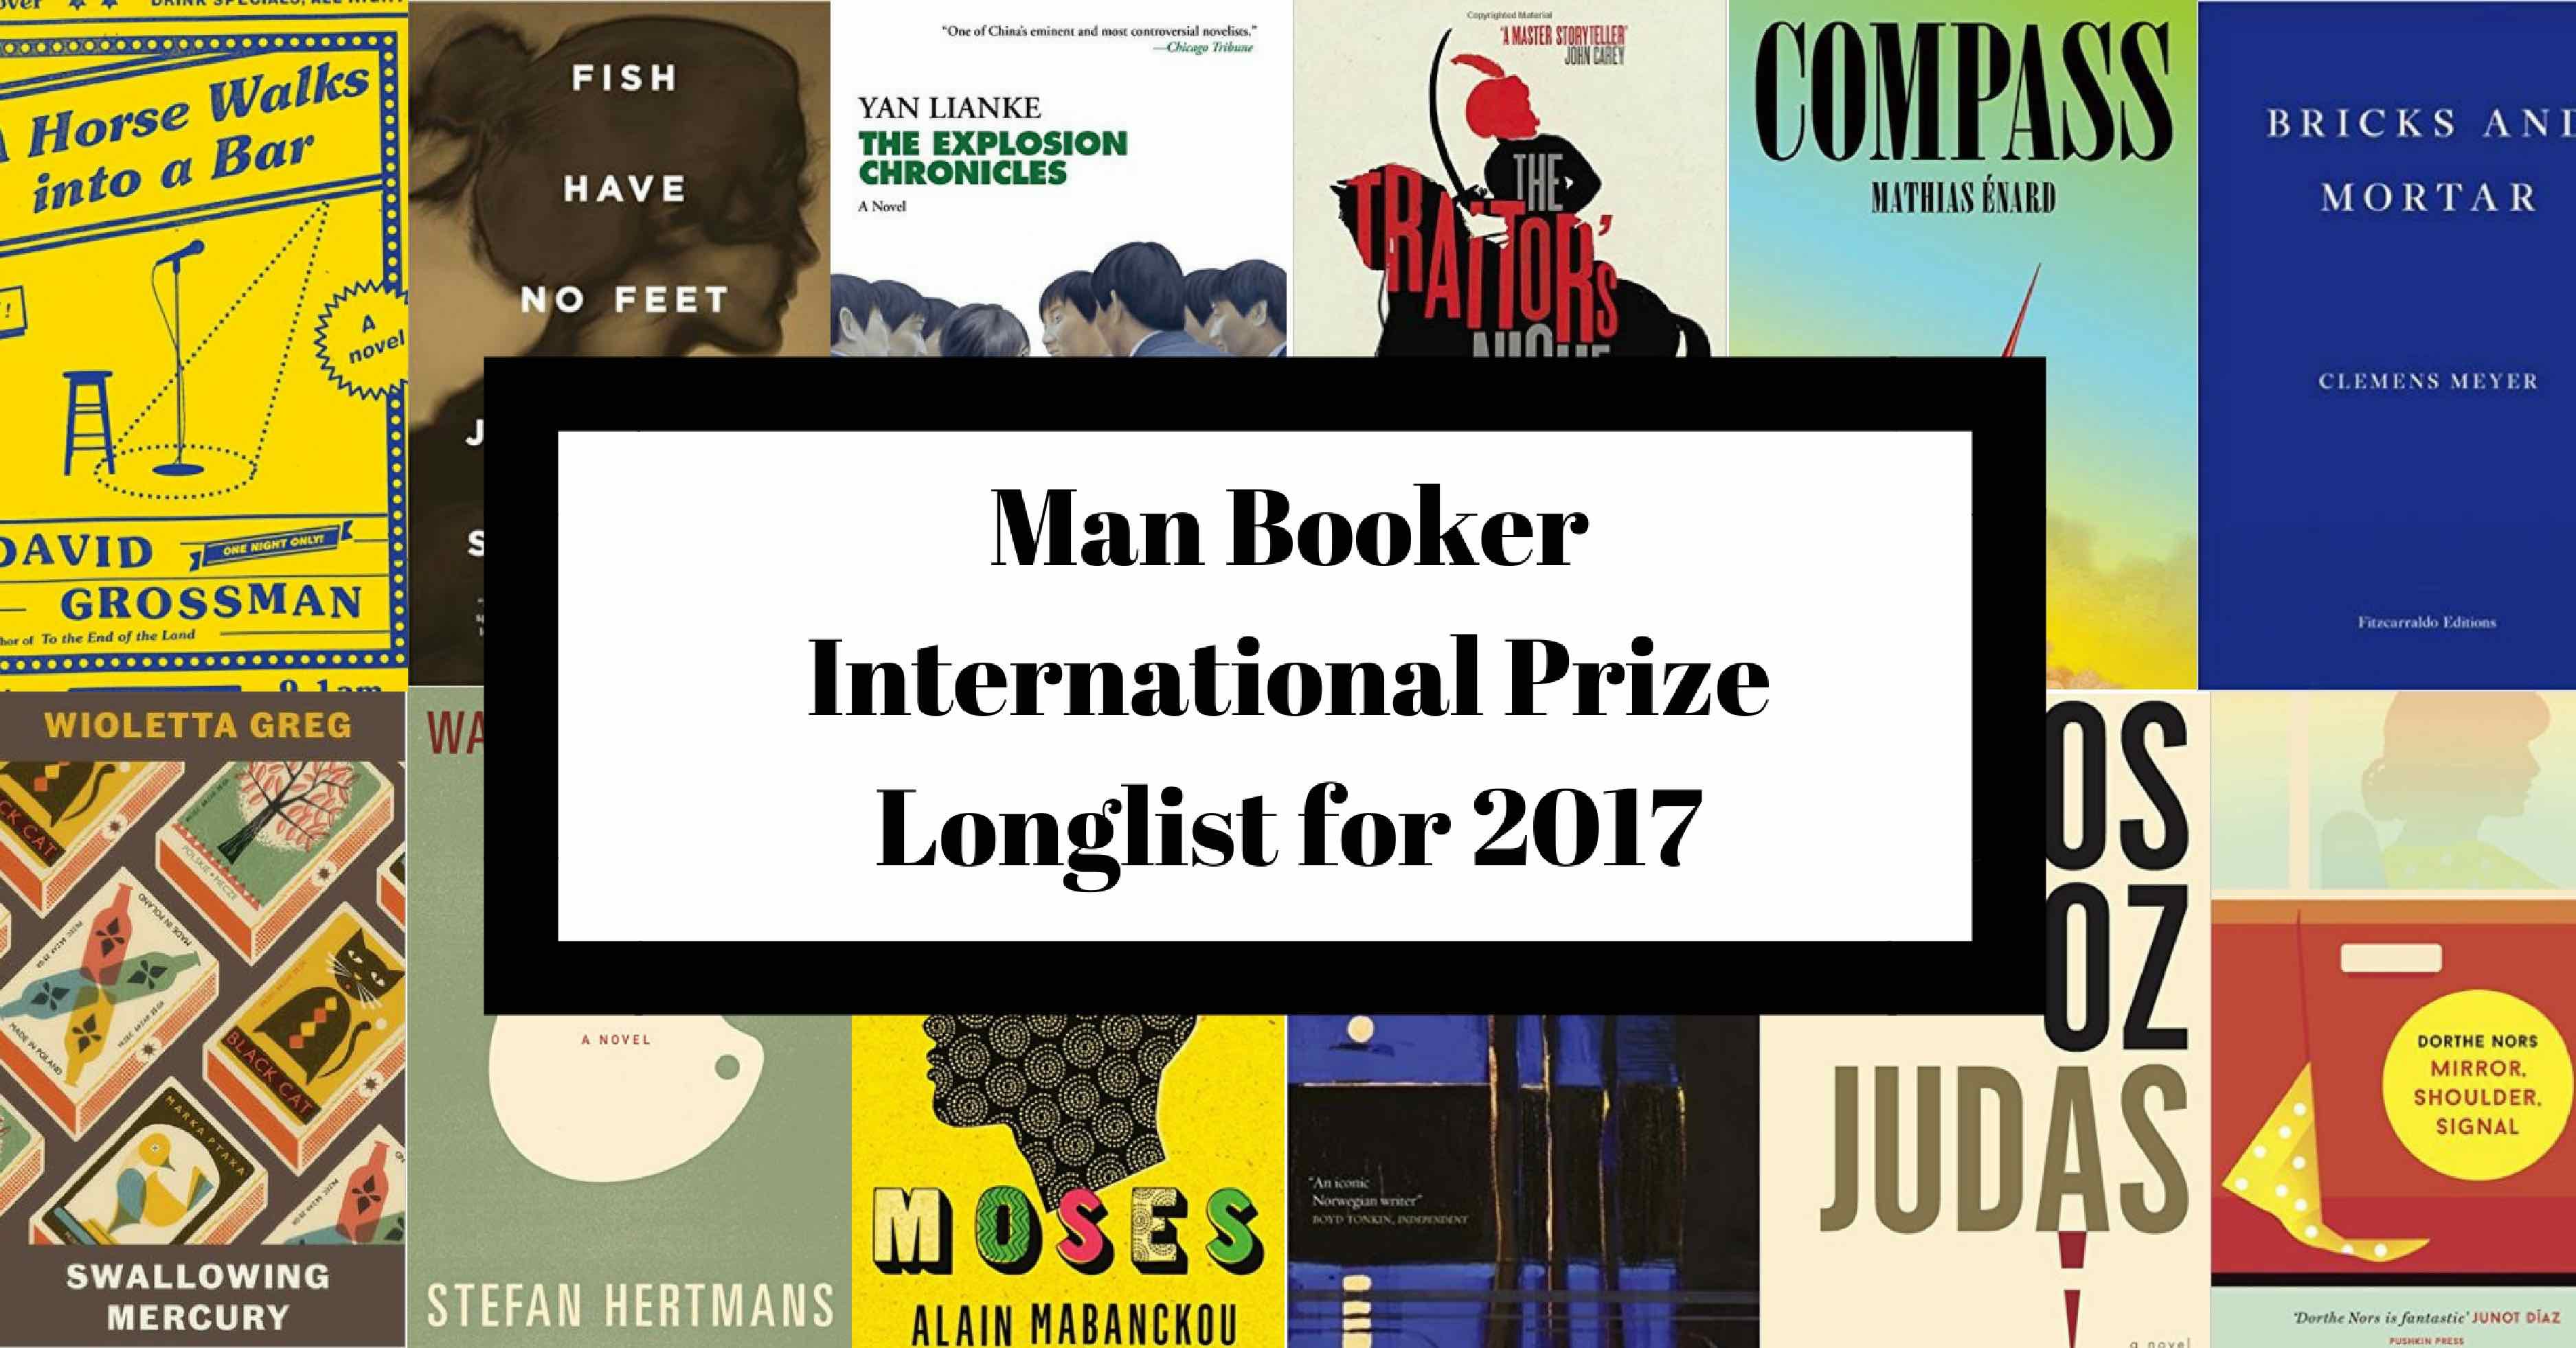 Man Booker International Prize Longlist for 2017